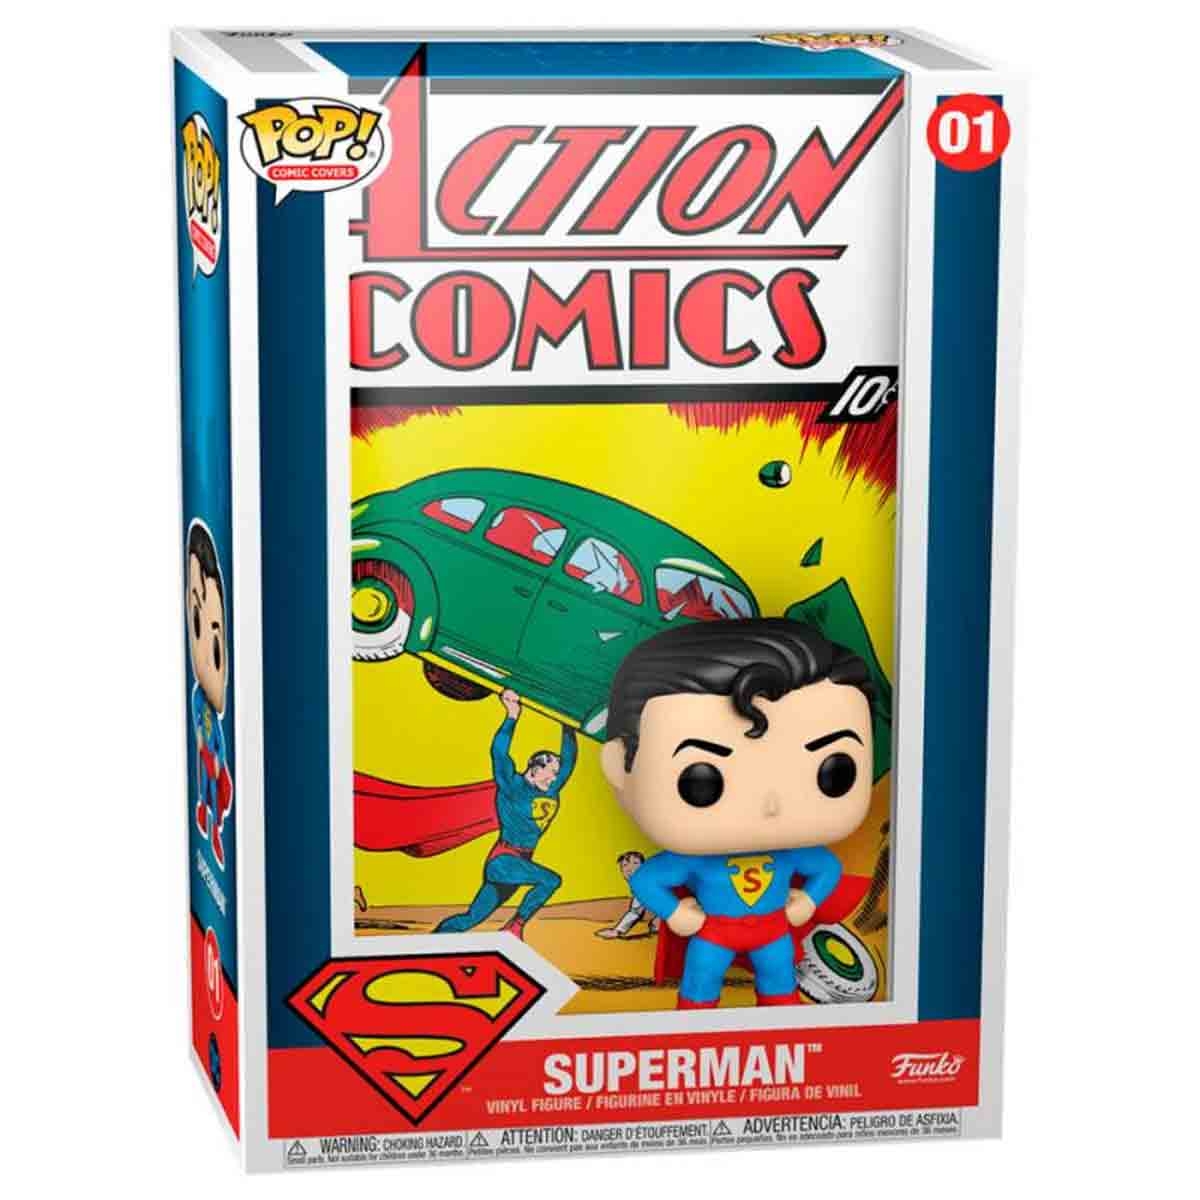 POP! Superman 01 Comic...